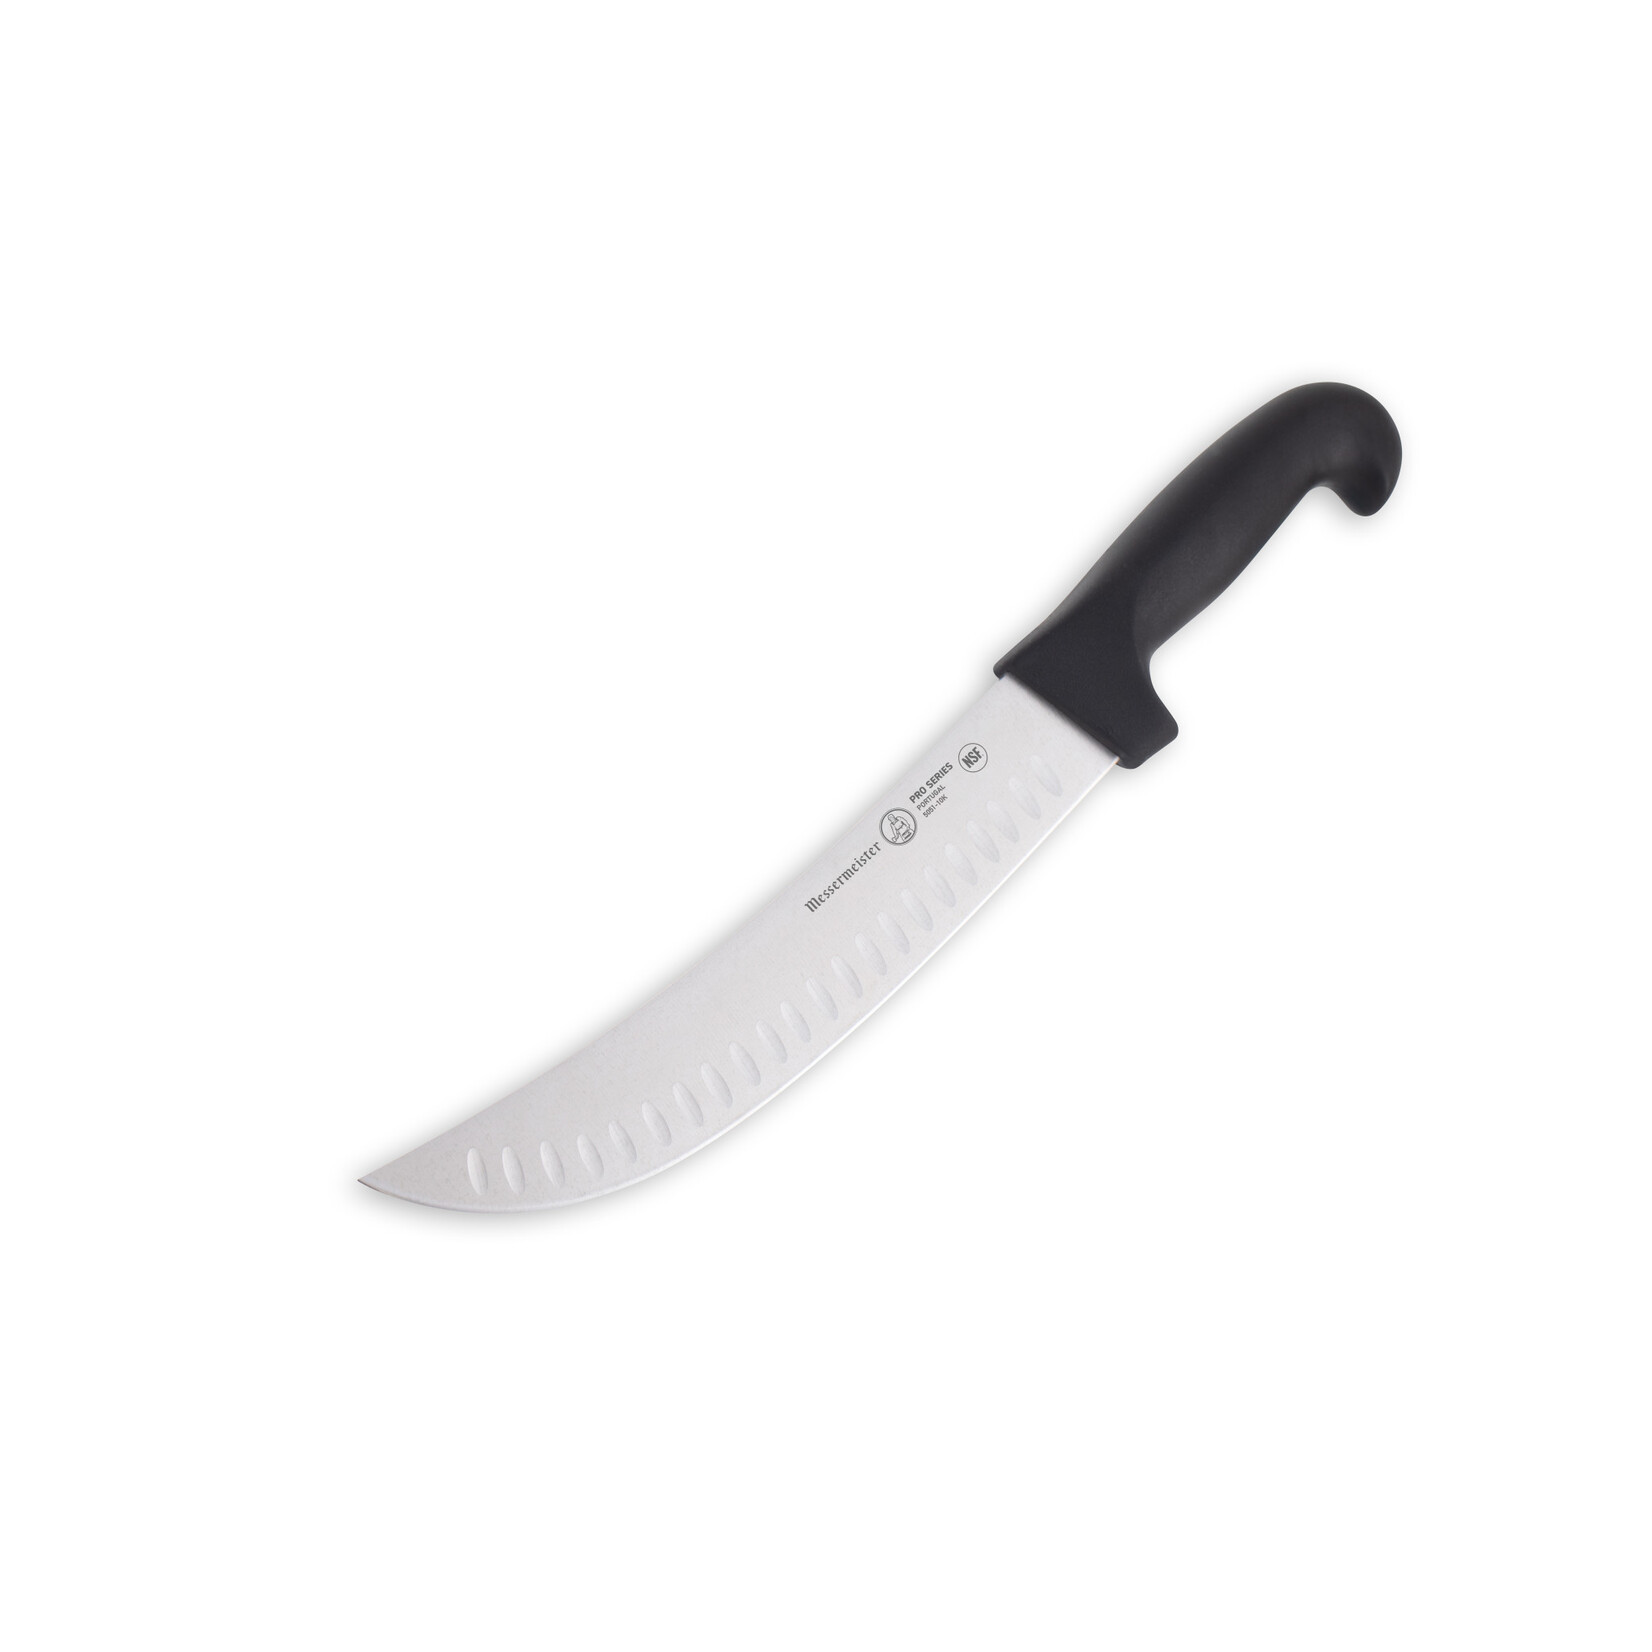 Messermeister Pro Series 10 Inch Kullenschliff Scimitar Knife with Polypropylene Handle